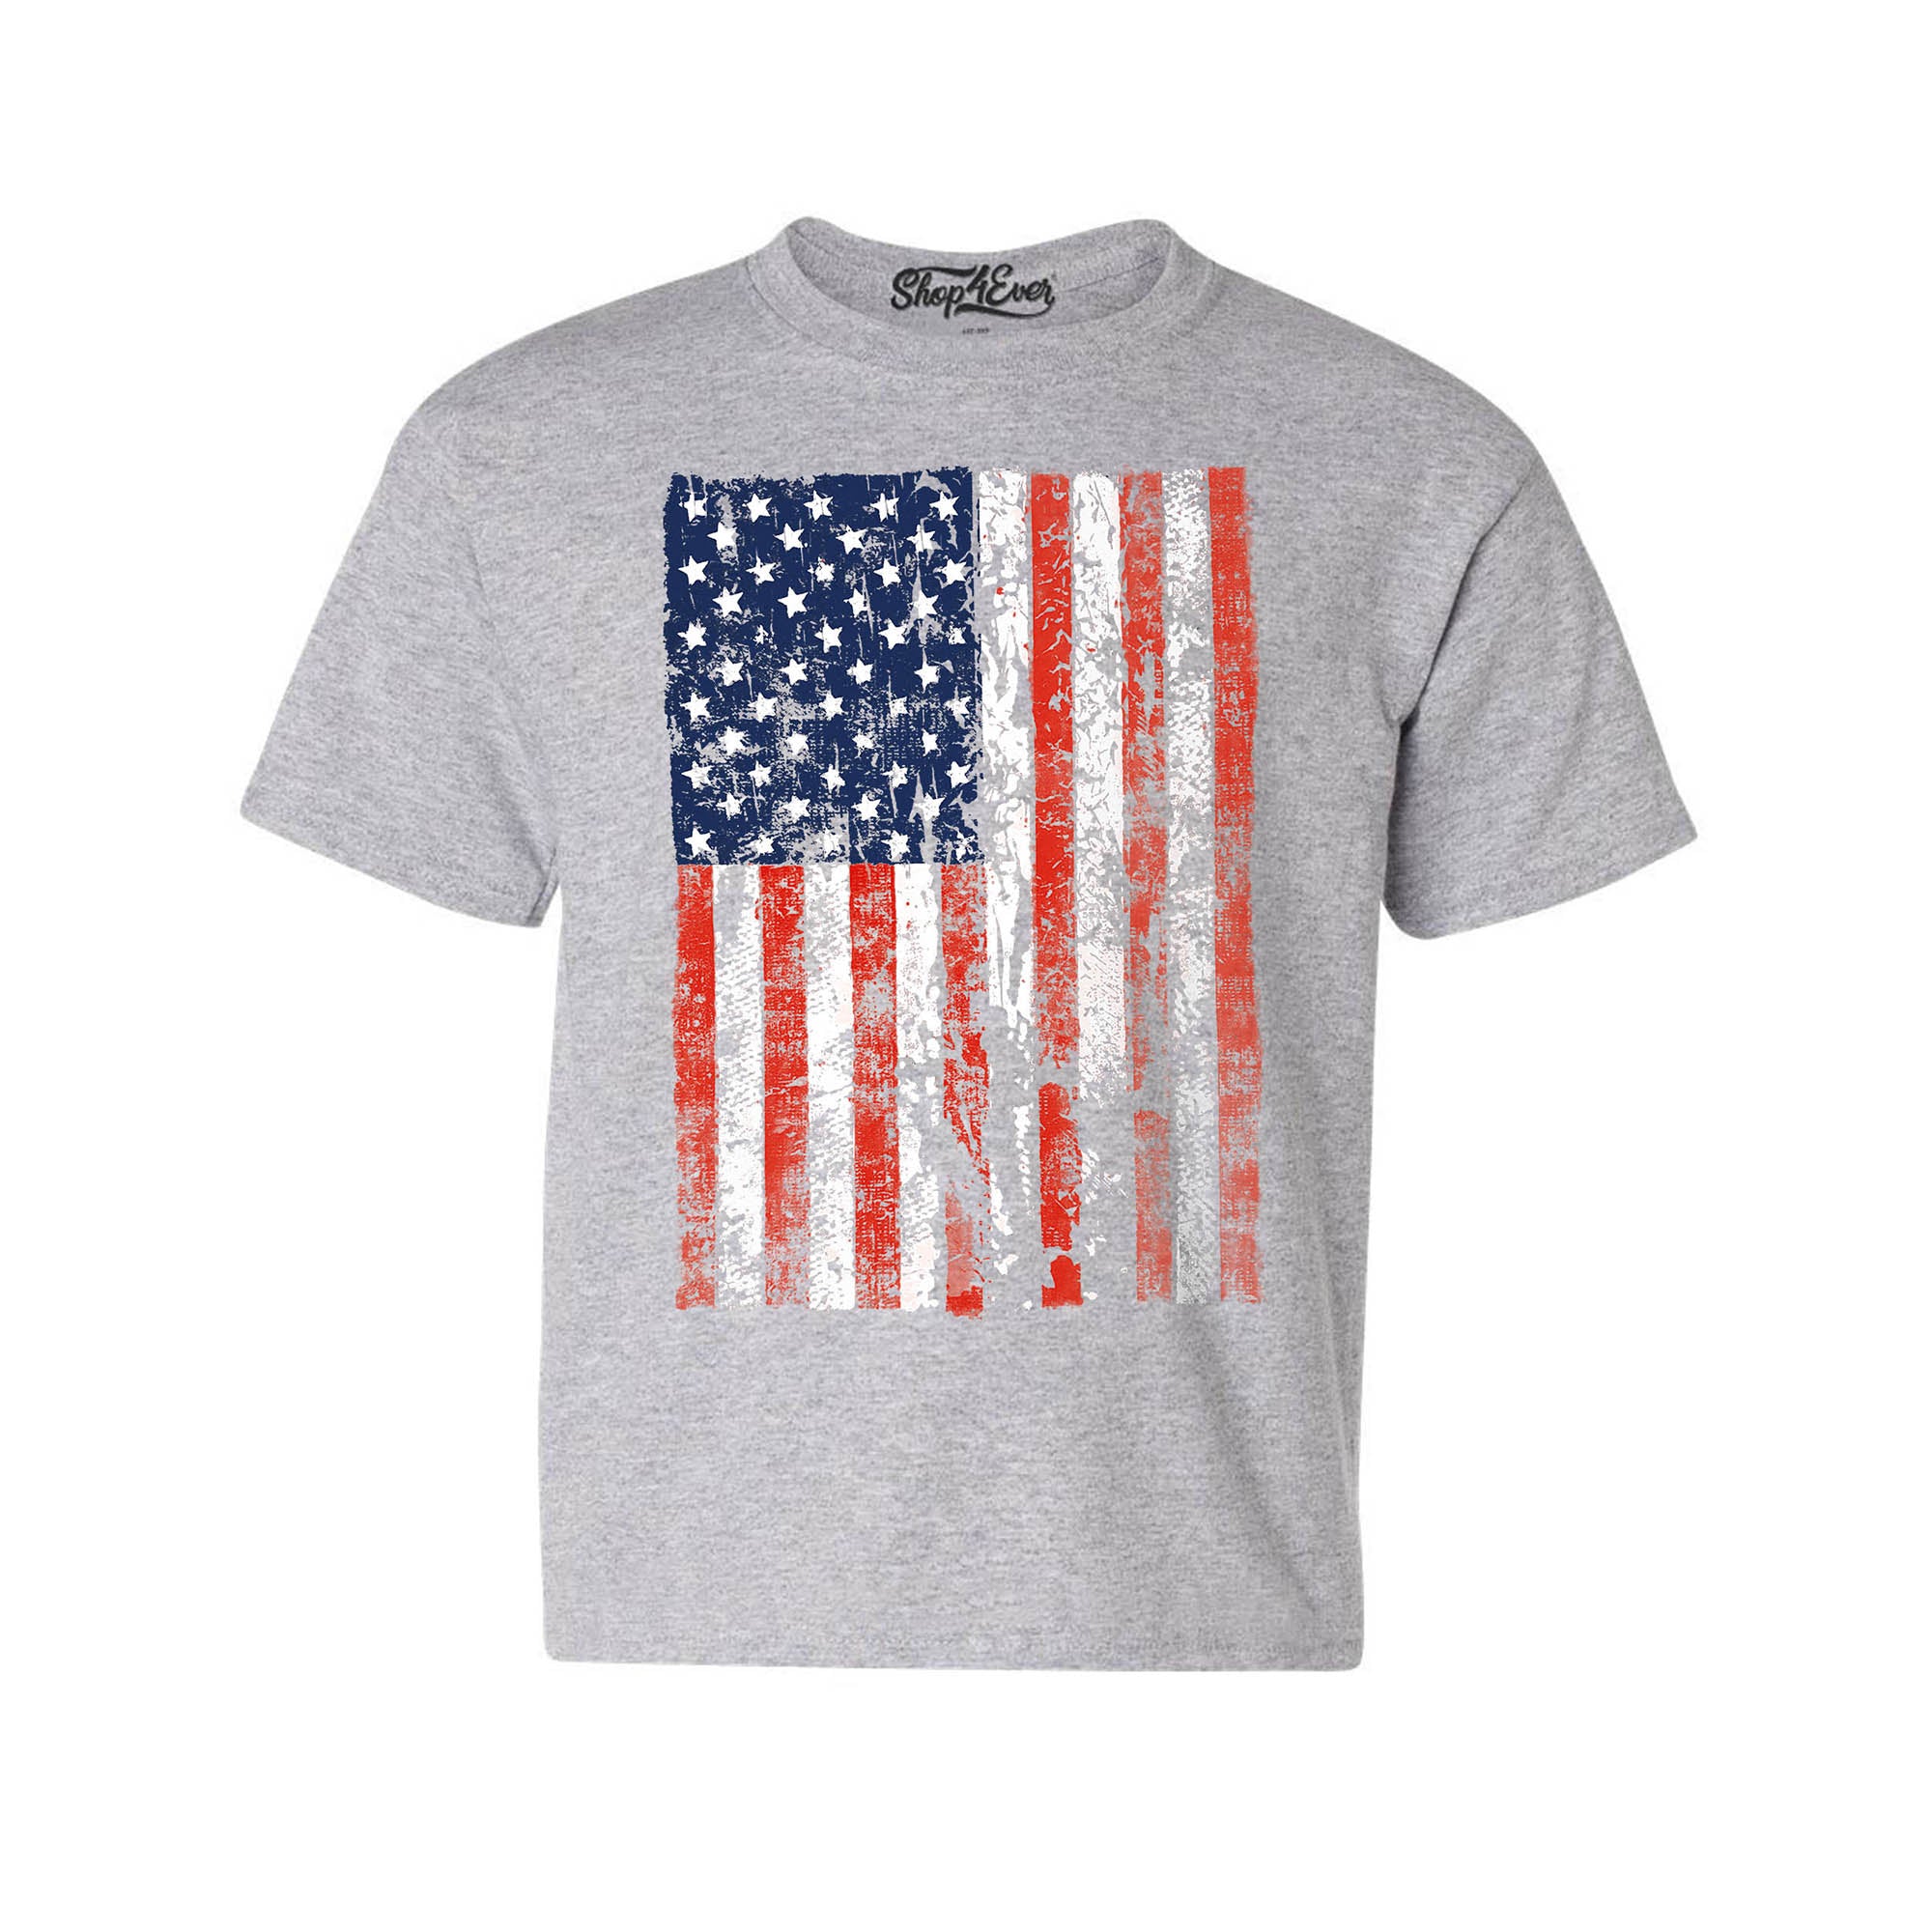 United States of America Flag Vintage Youth's T-Shirt USA Flag Shirts